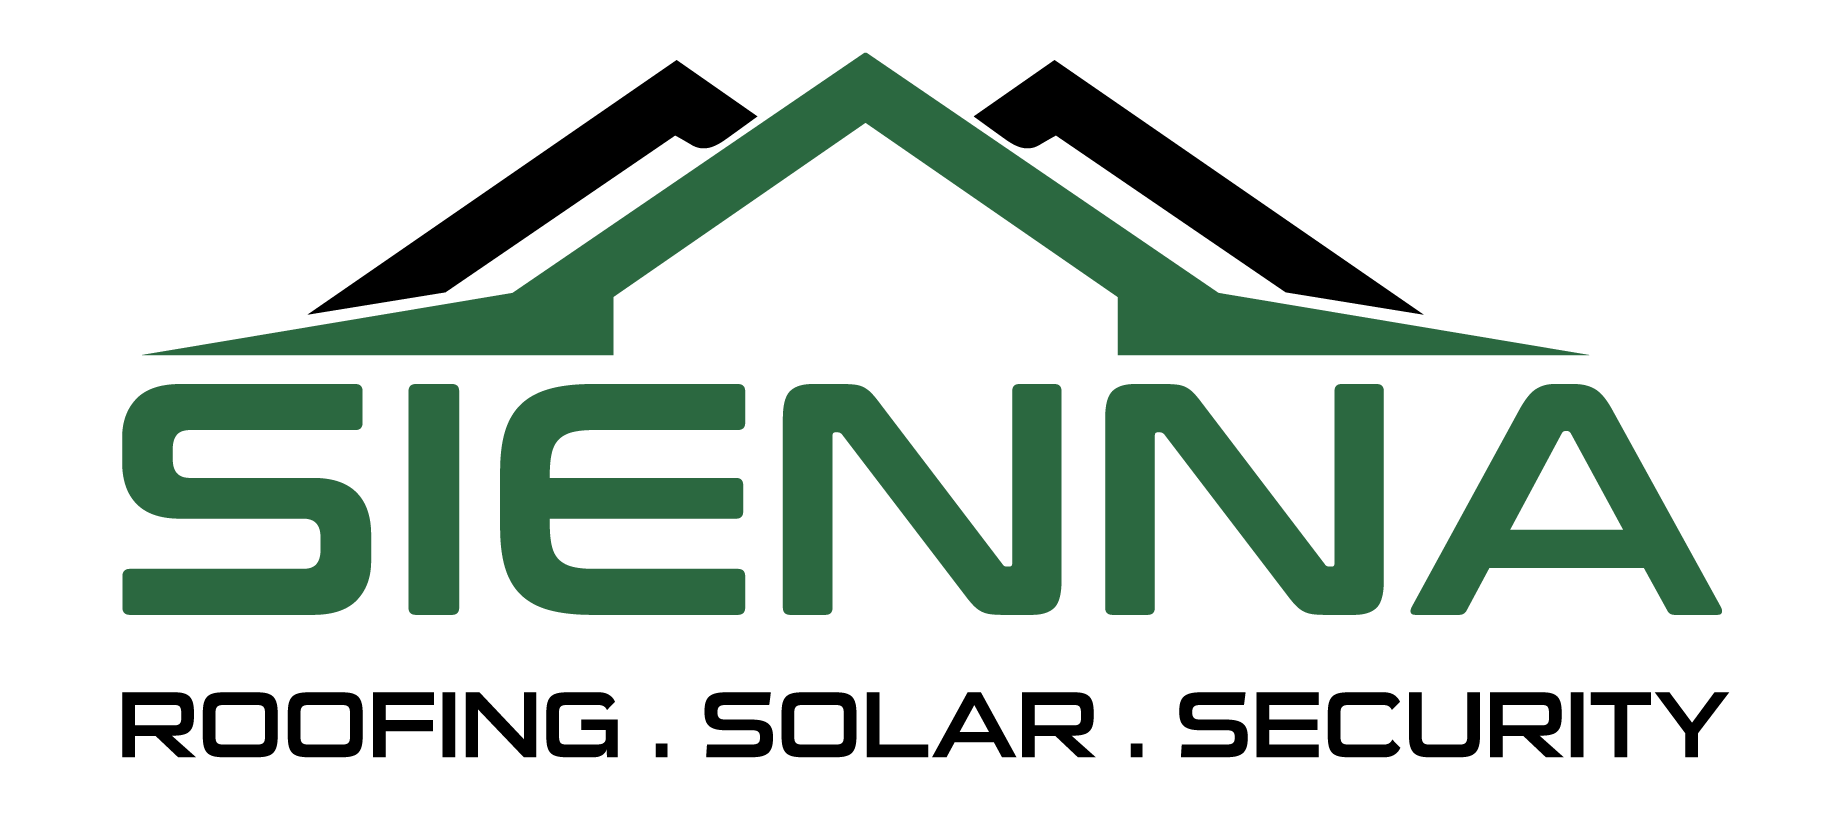 Sienna-Roofing-Solar-LLC-logo.png